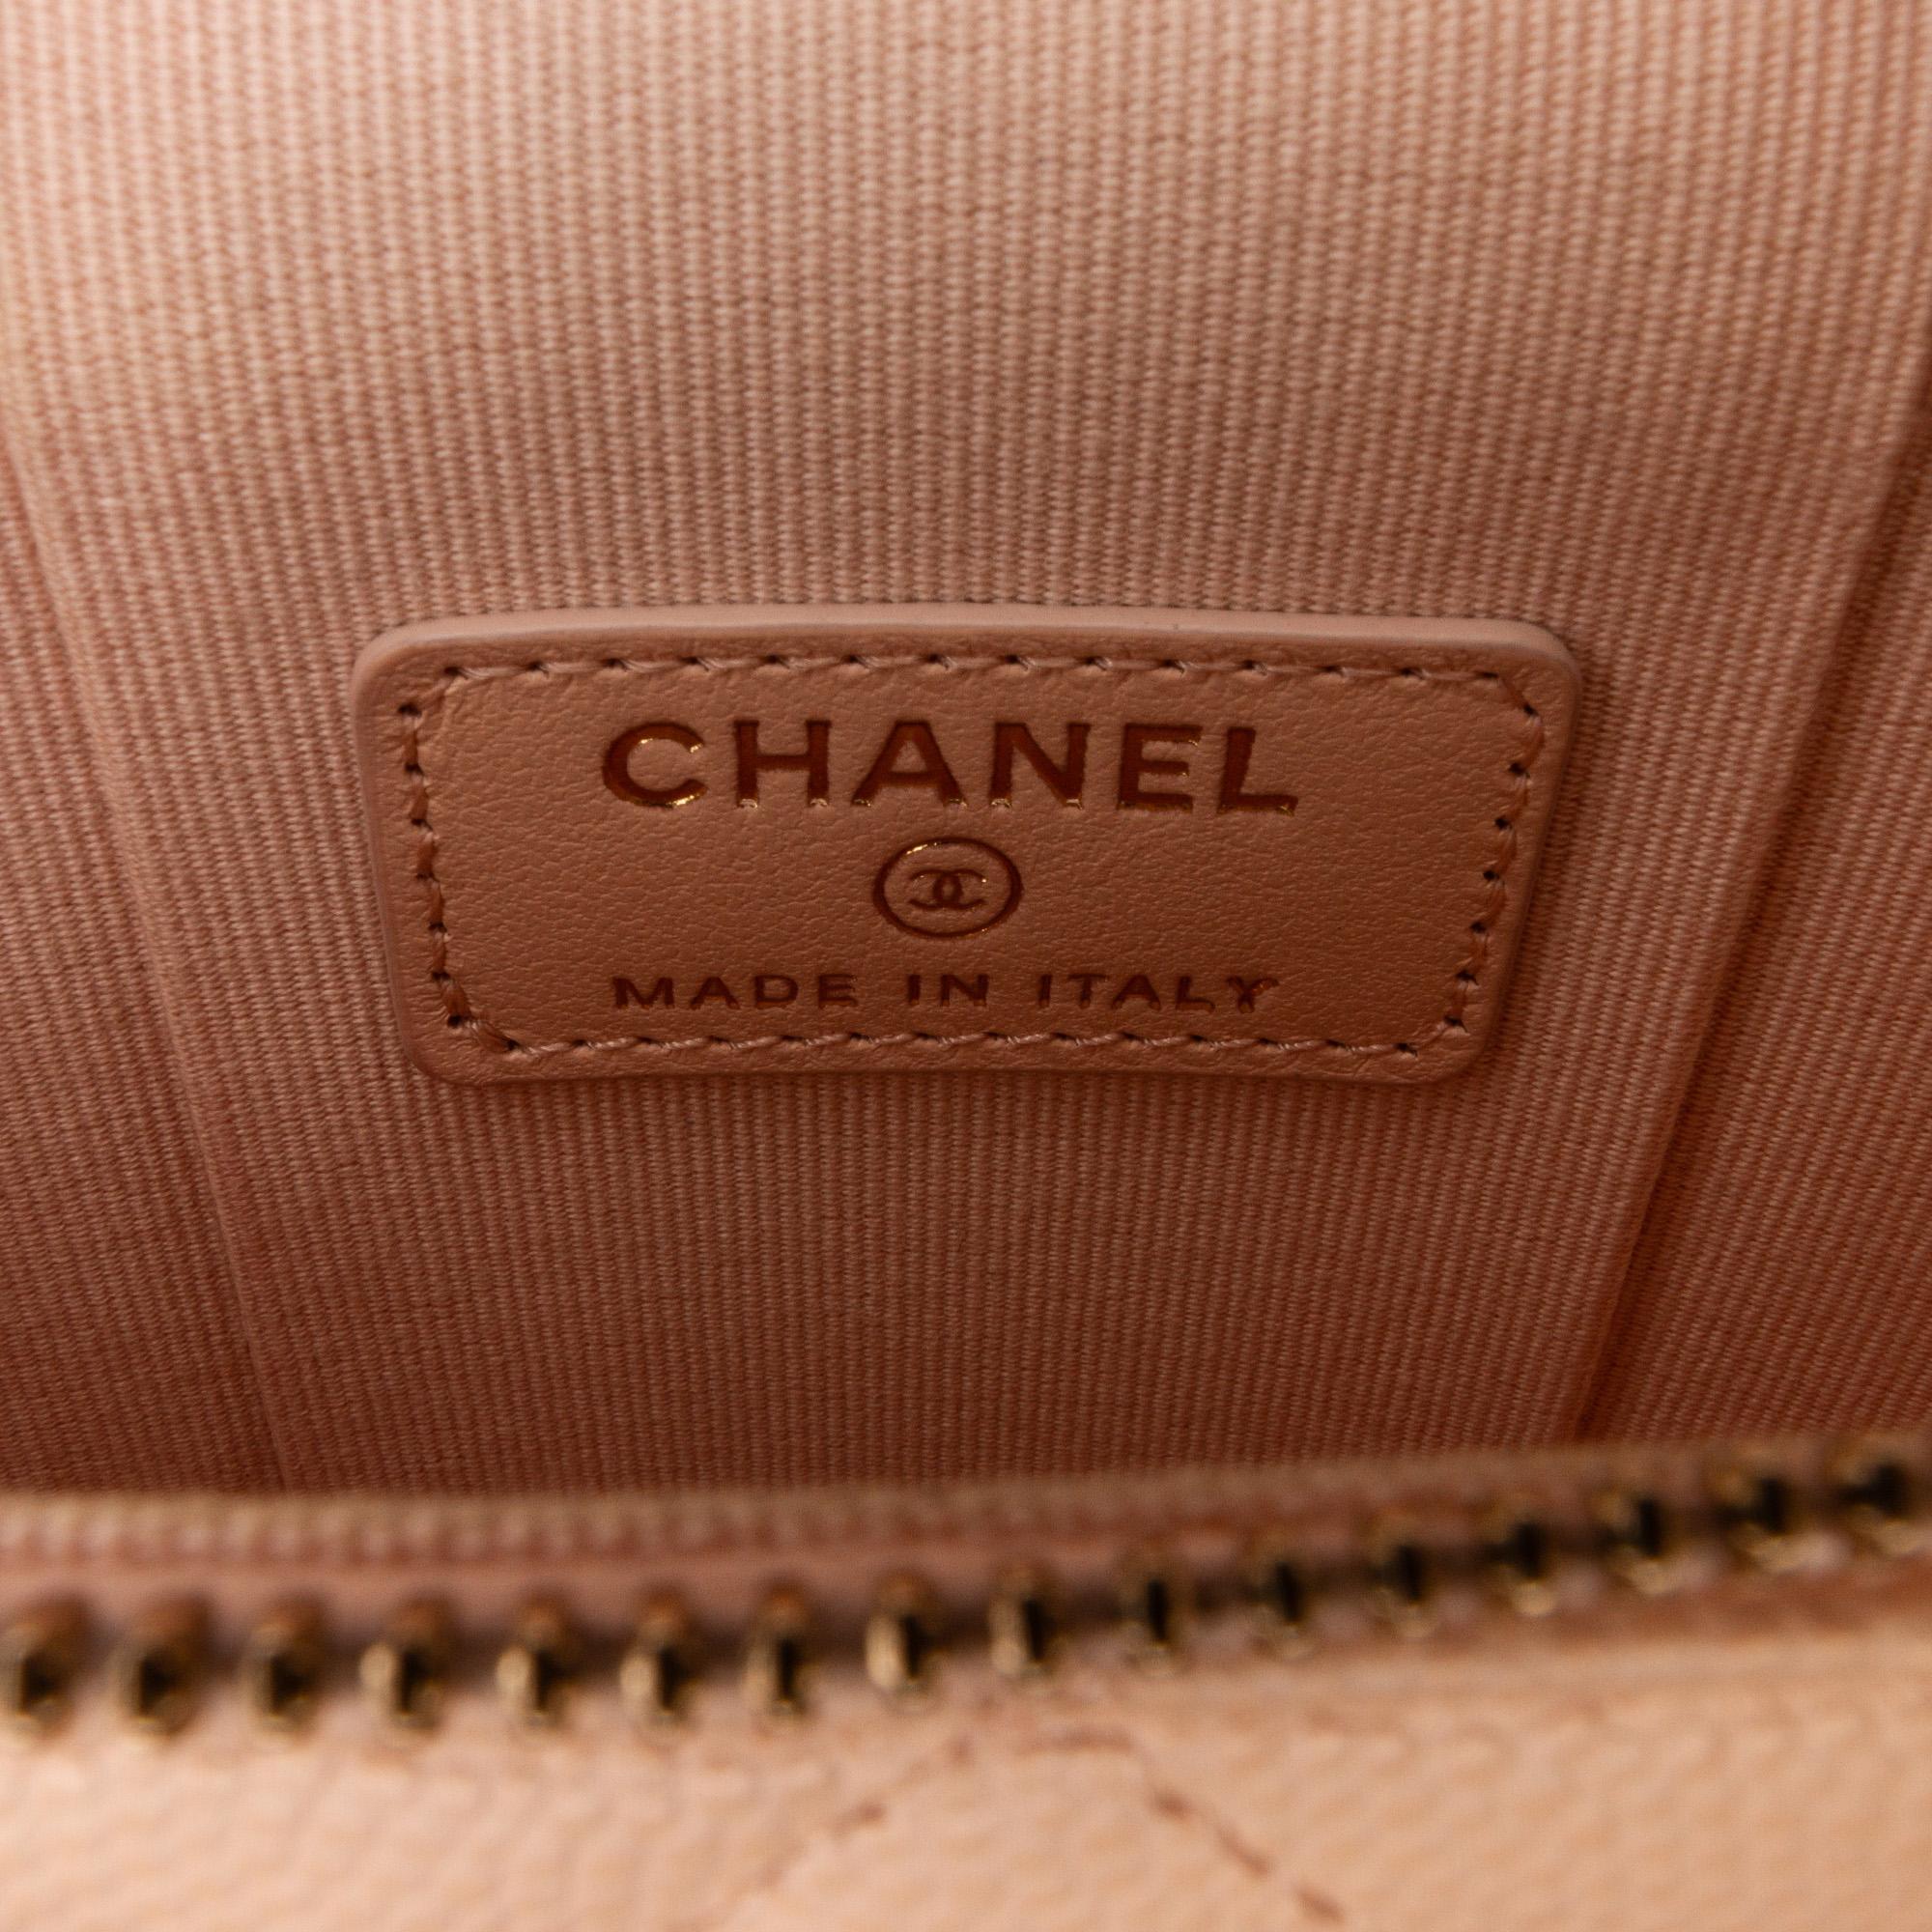 Chanel Pink CC Caviar Vanity Bag